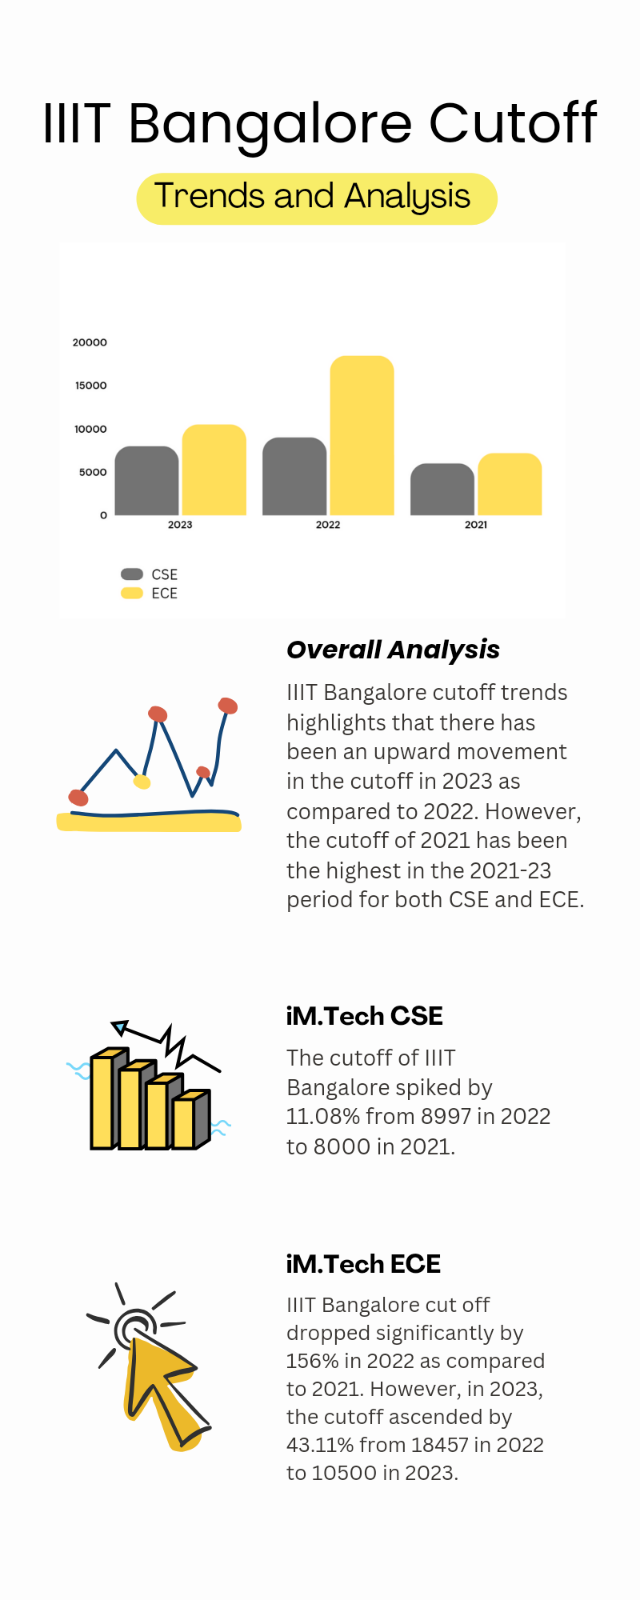 IIIT Bangalore Cutoff Trends